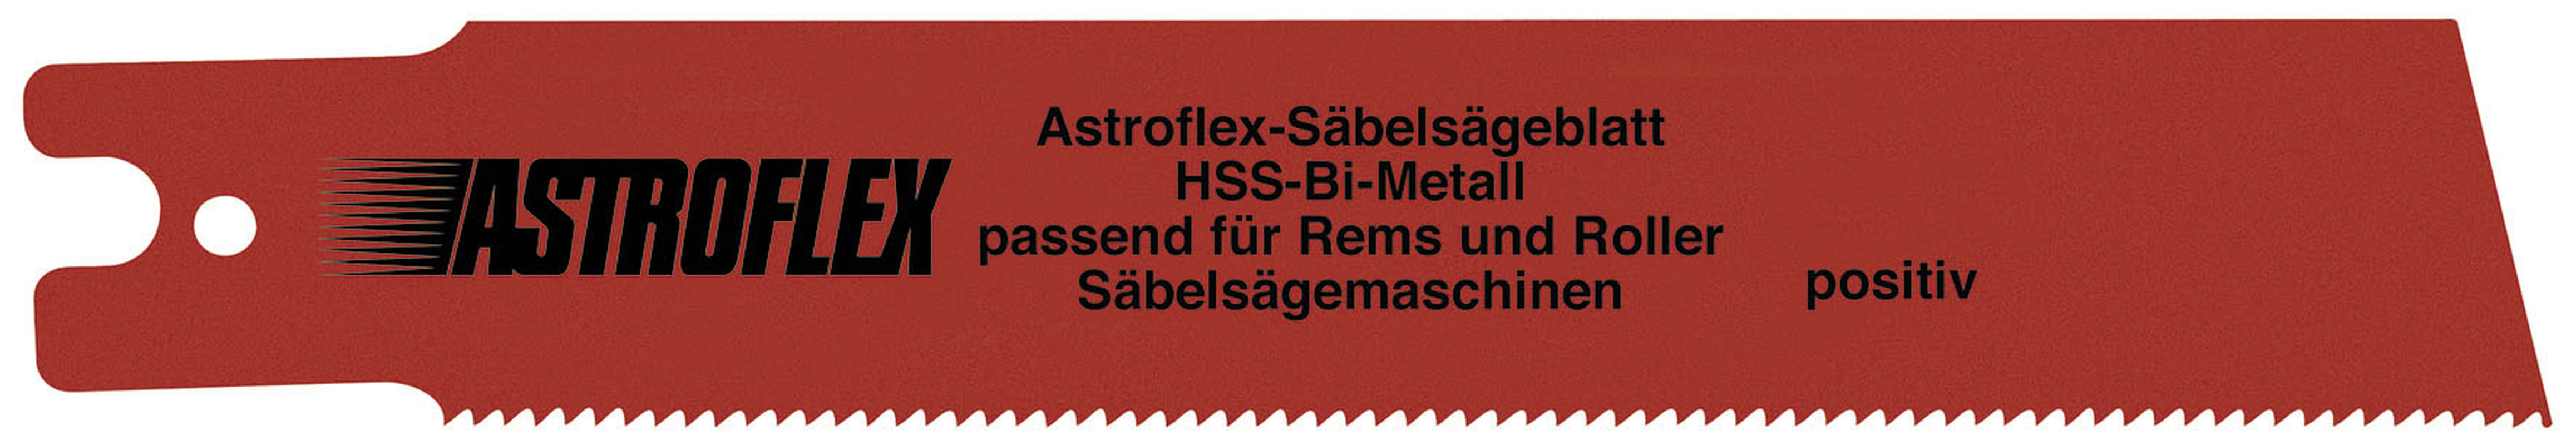 Astroflex Säbelsägeblatt passend für Rems-Roller